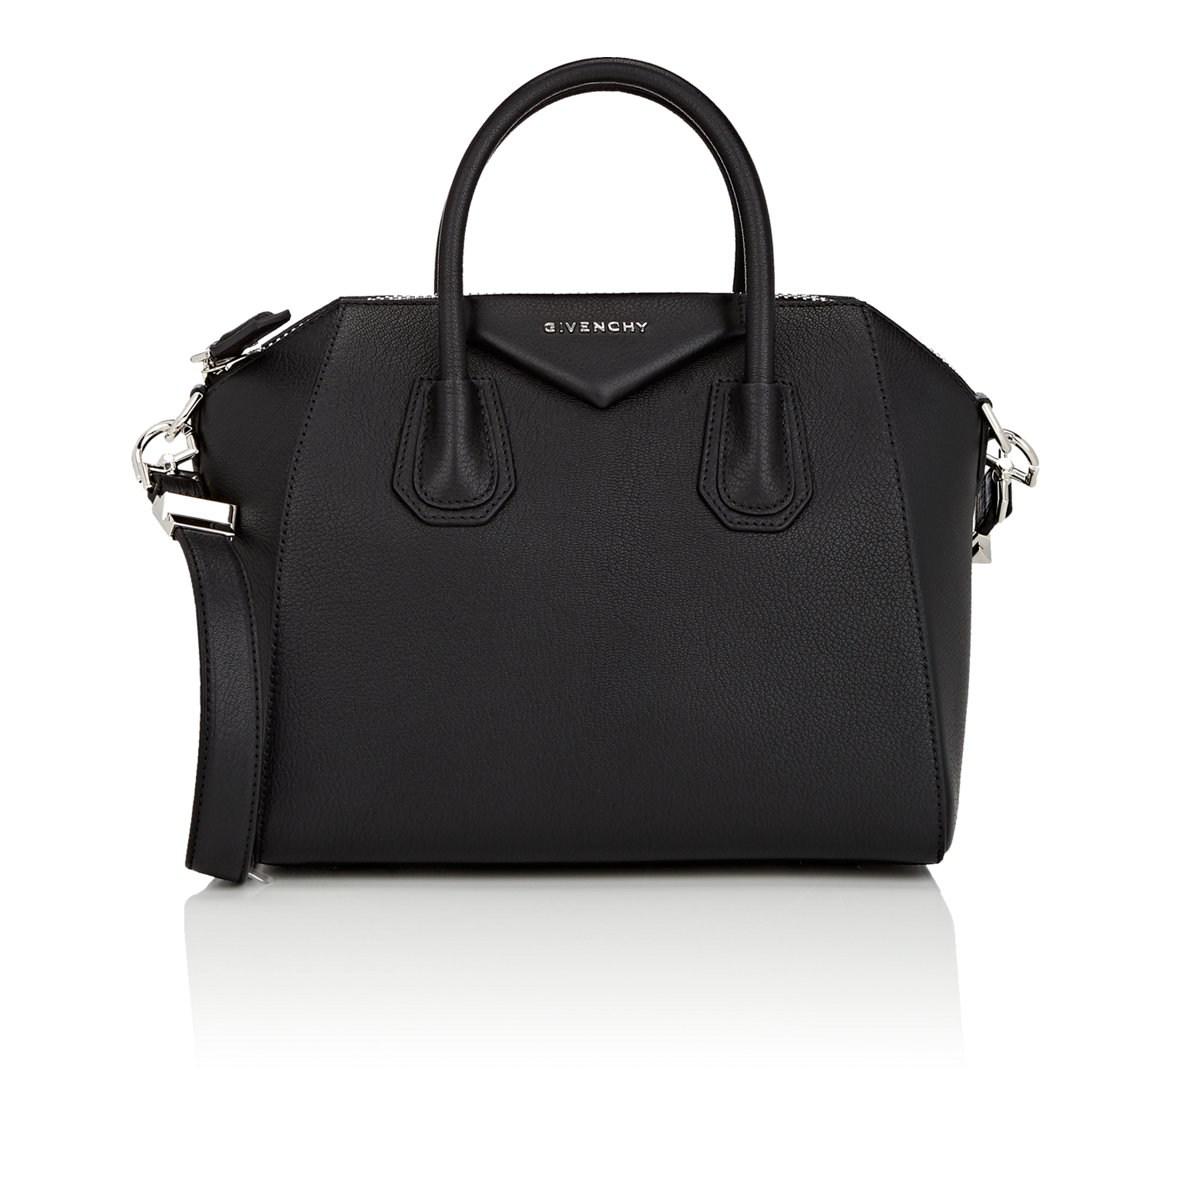 Givenchy Antigona Small Leather Duffel Bag in Black - Lyst